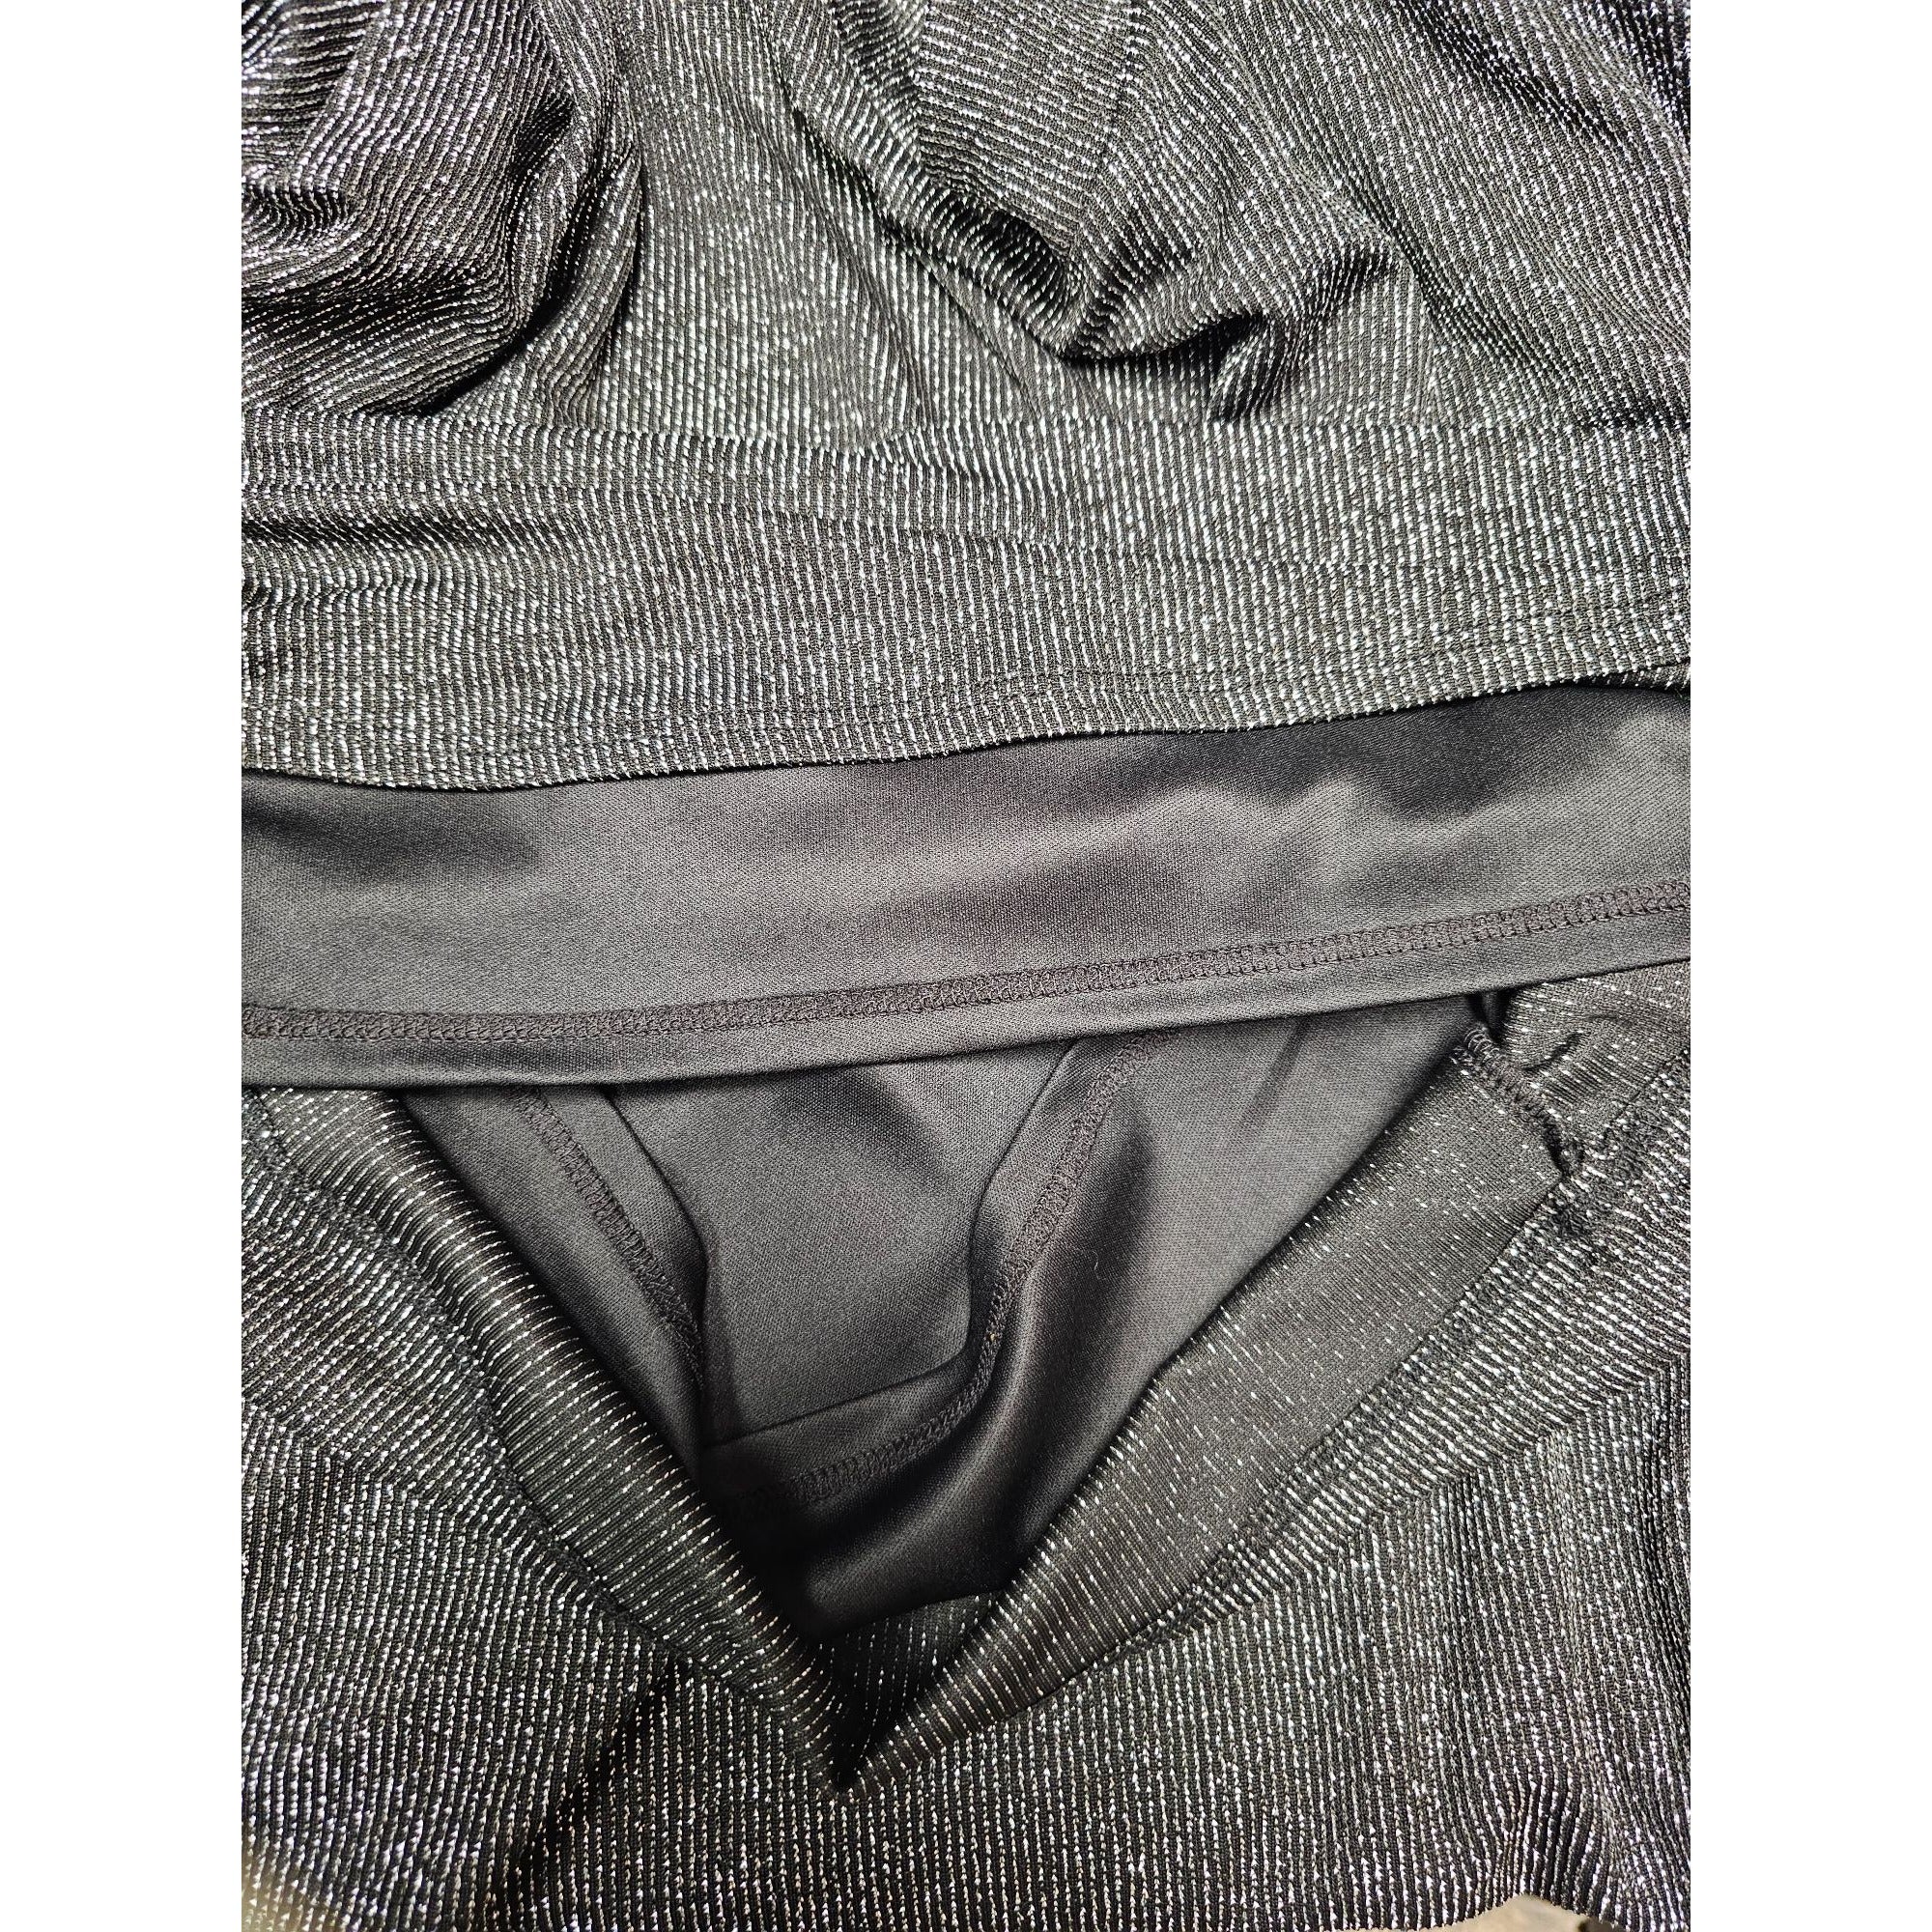 Versona Nylon & Metallic Blend, Long Sleeve, Above the Knee, Party Dress Size L